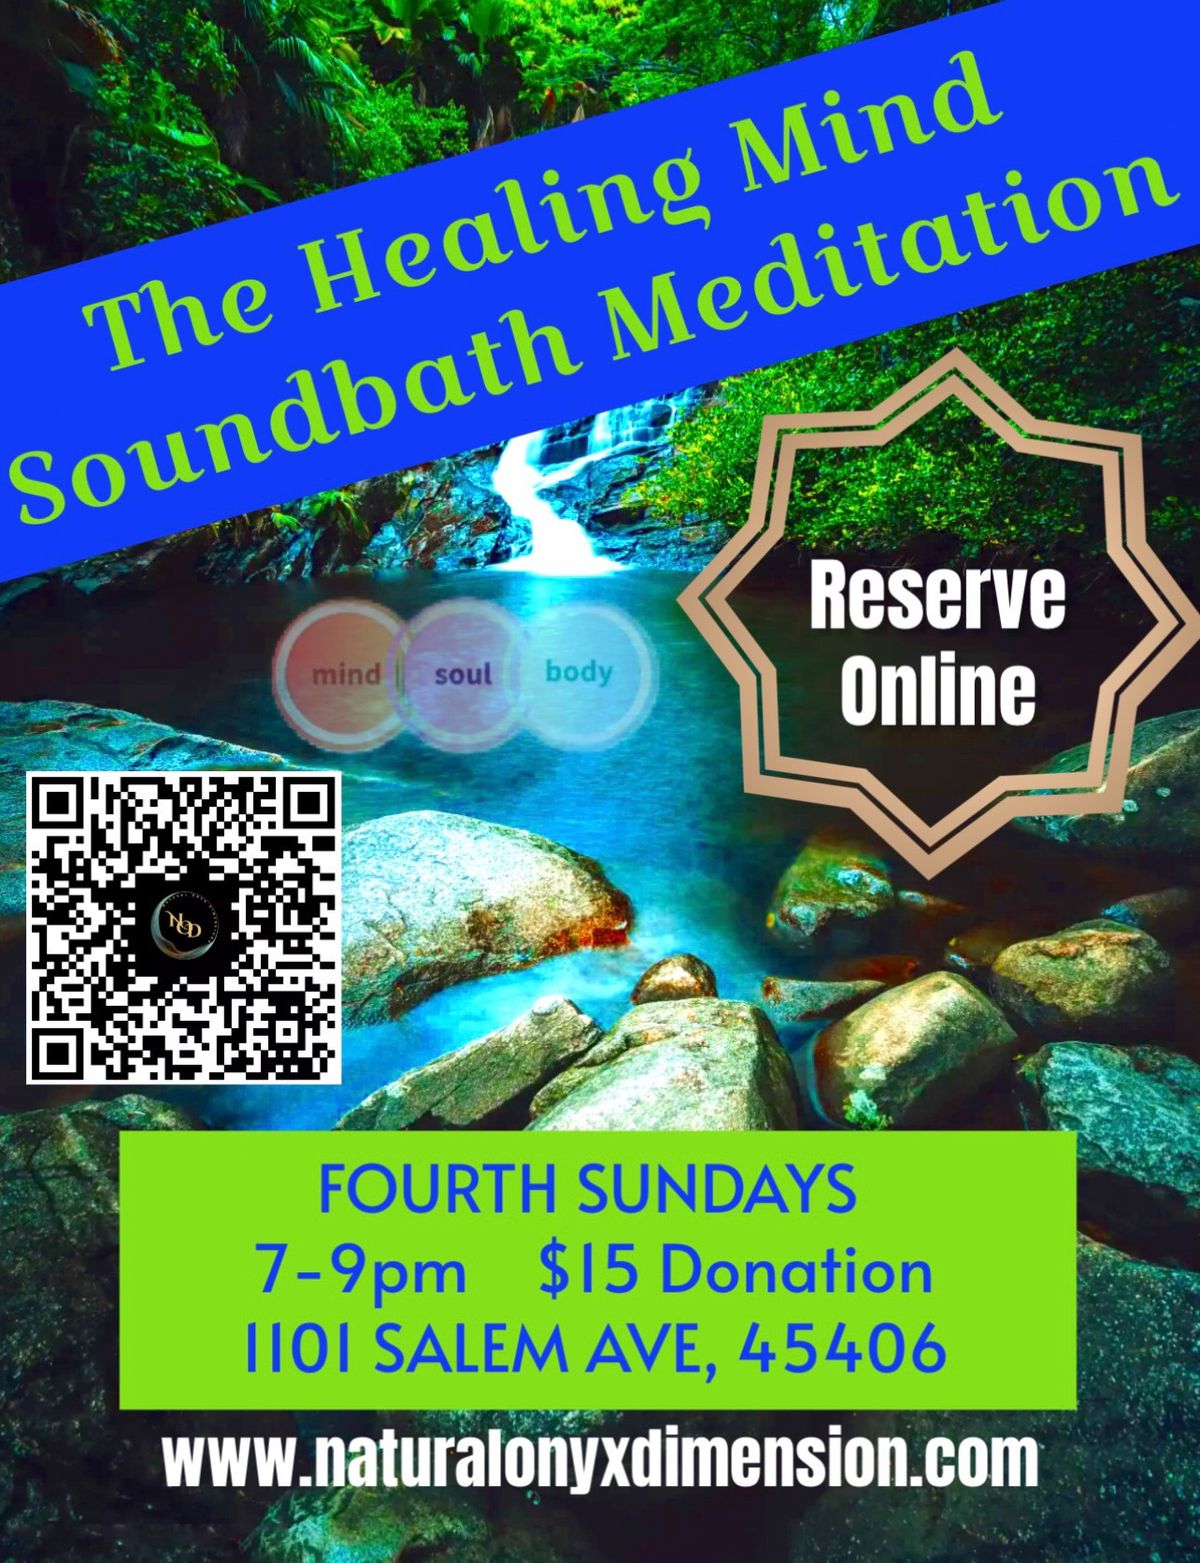 The Healing Mind Sound Bath Meditation